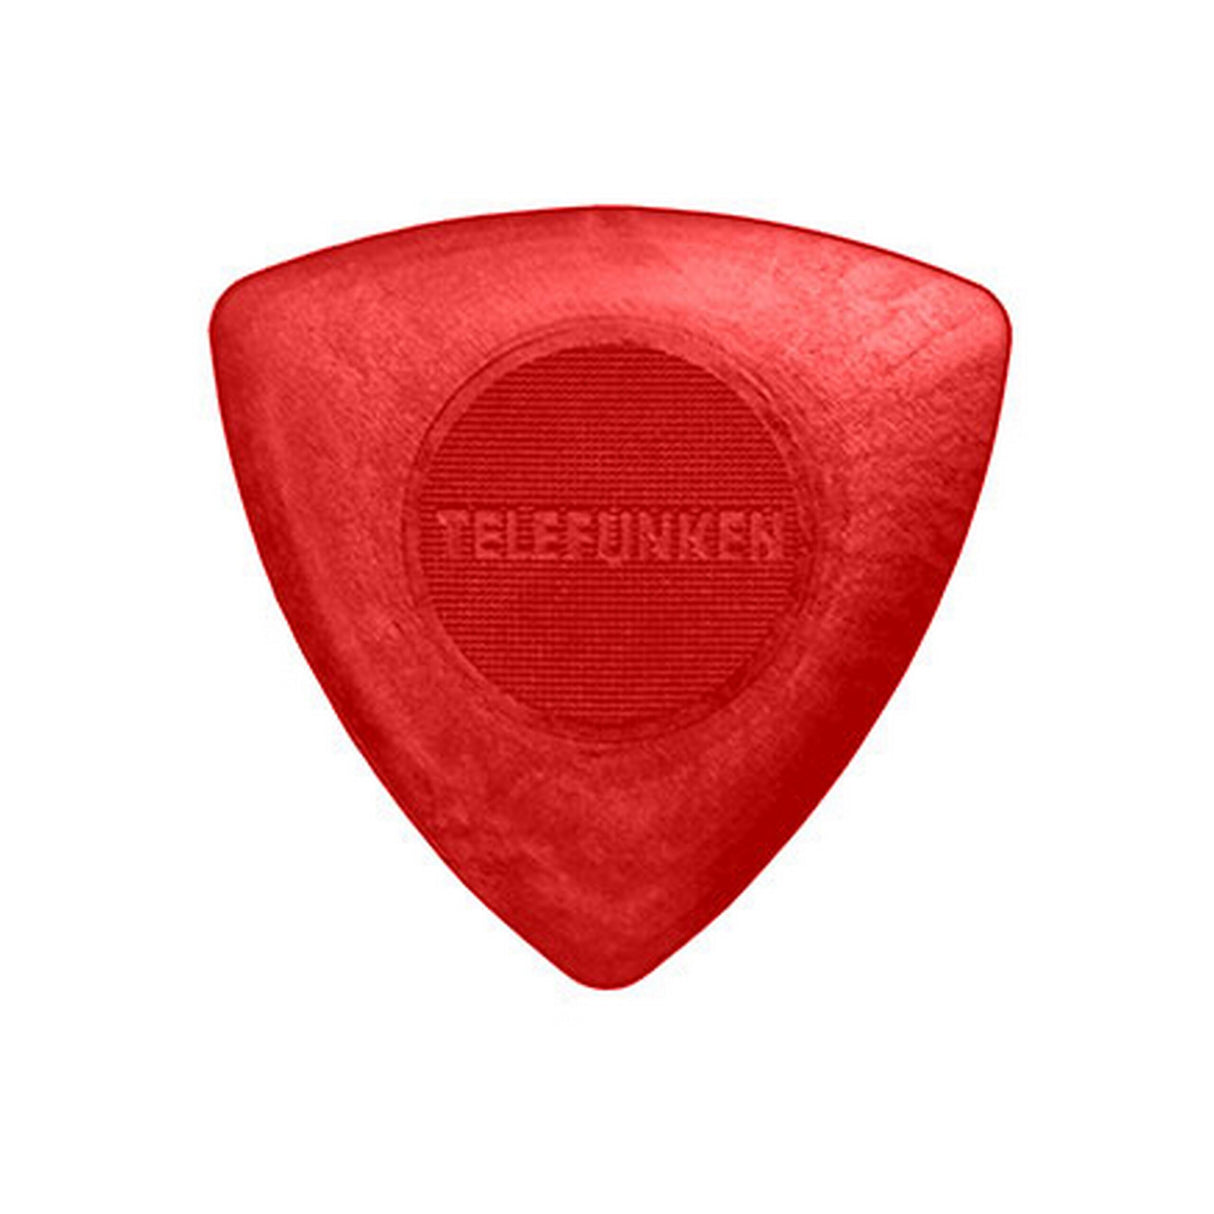 Telefunken 1.6mm Triangle 6 Pack Thin Guitar Picks, Red